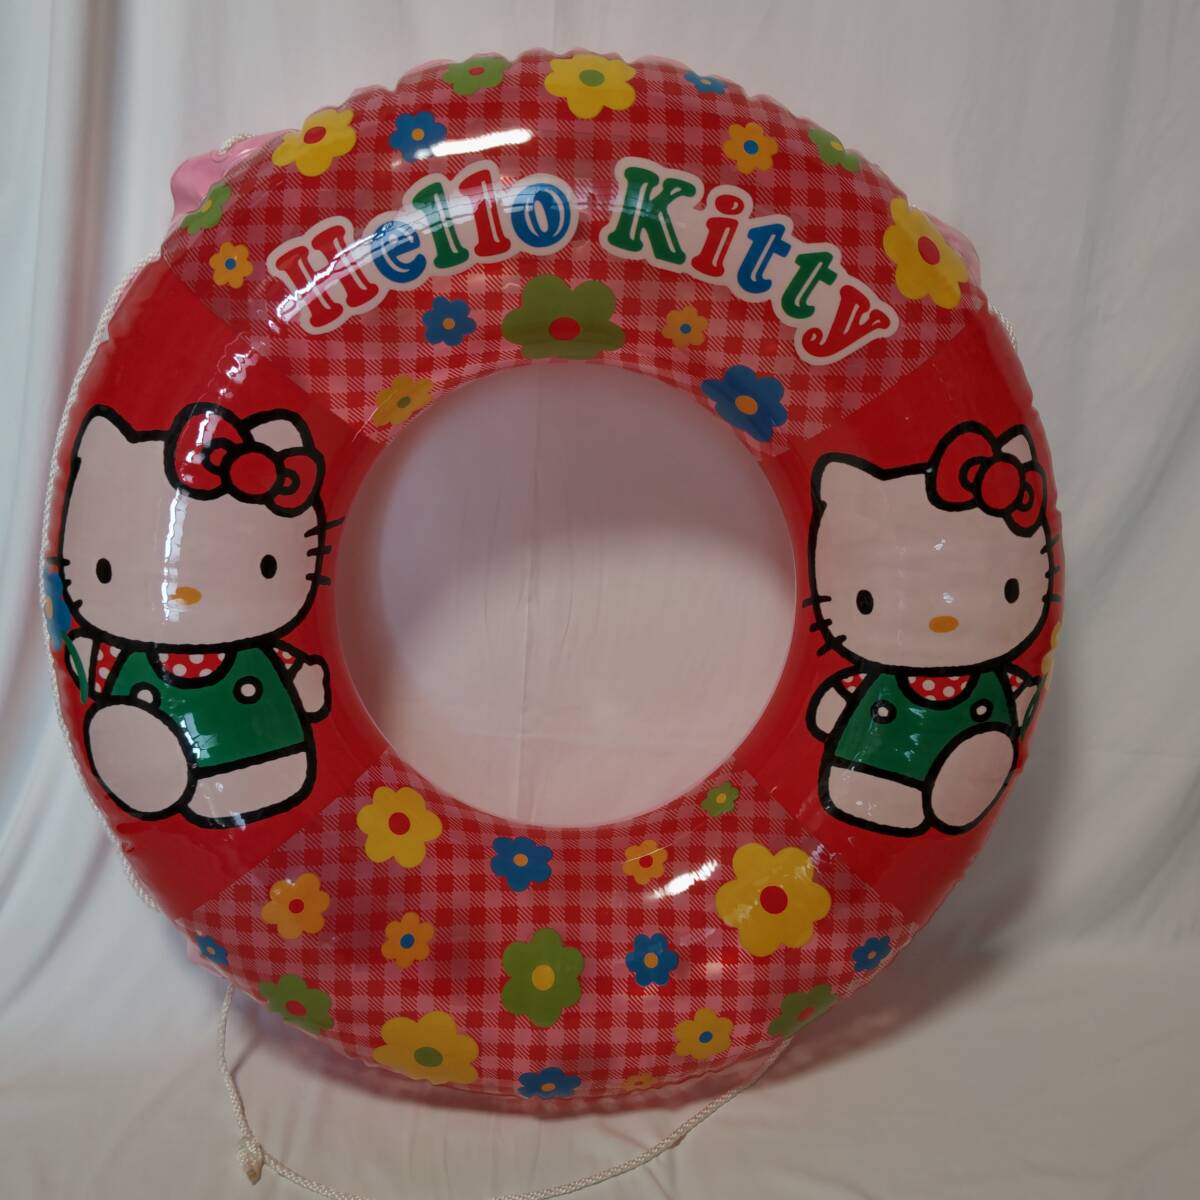  Hello Kitty swim ring 90cm 1992 year of model 